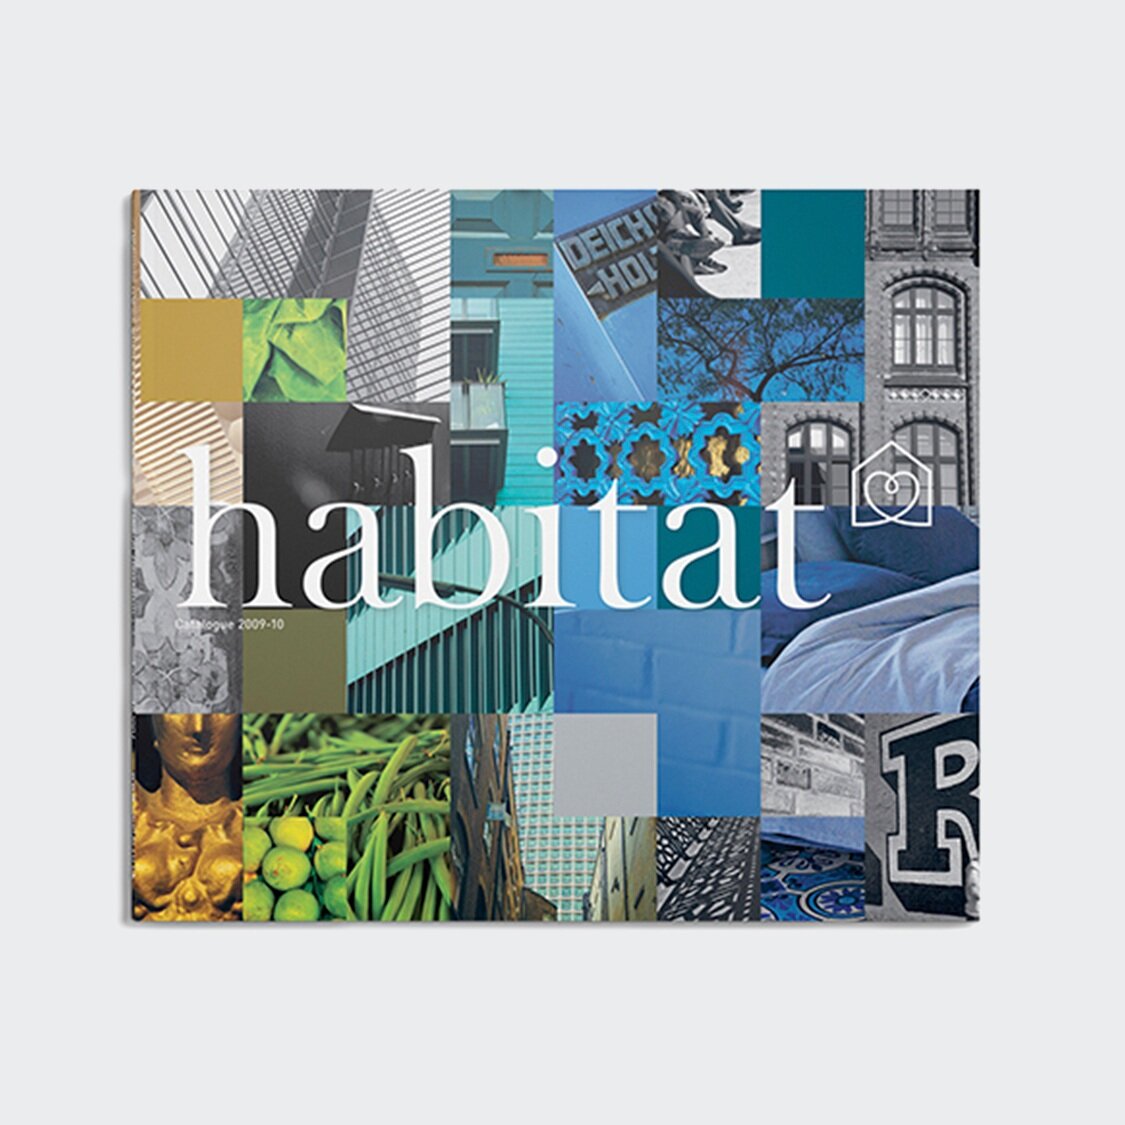 2006. London. Creative Director Habitat for 5 years